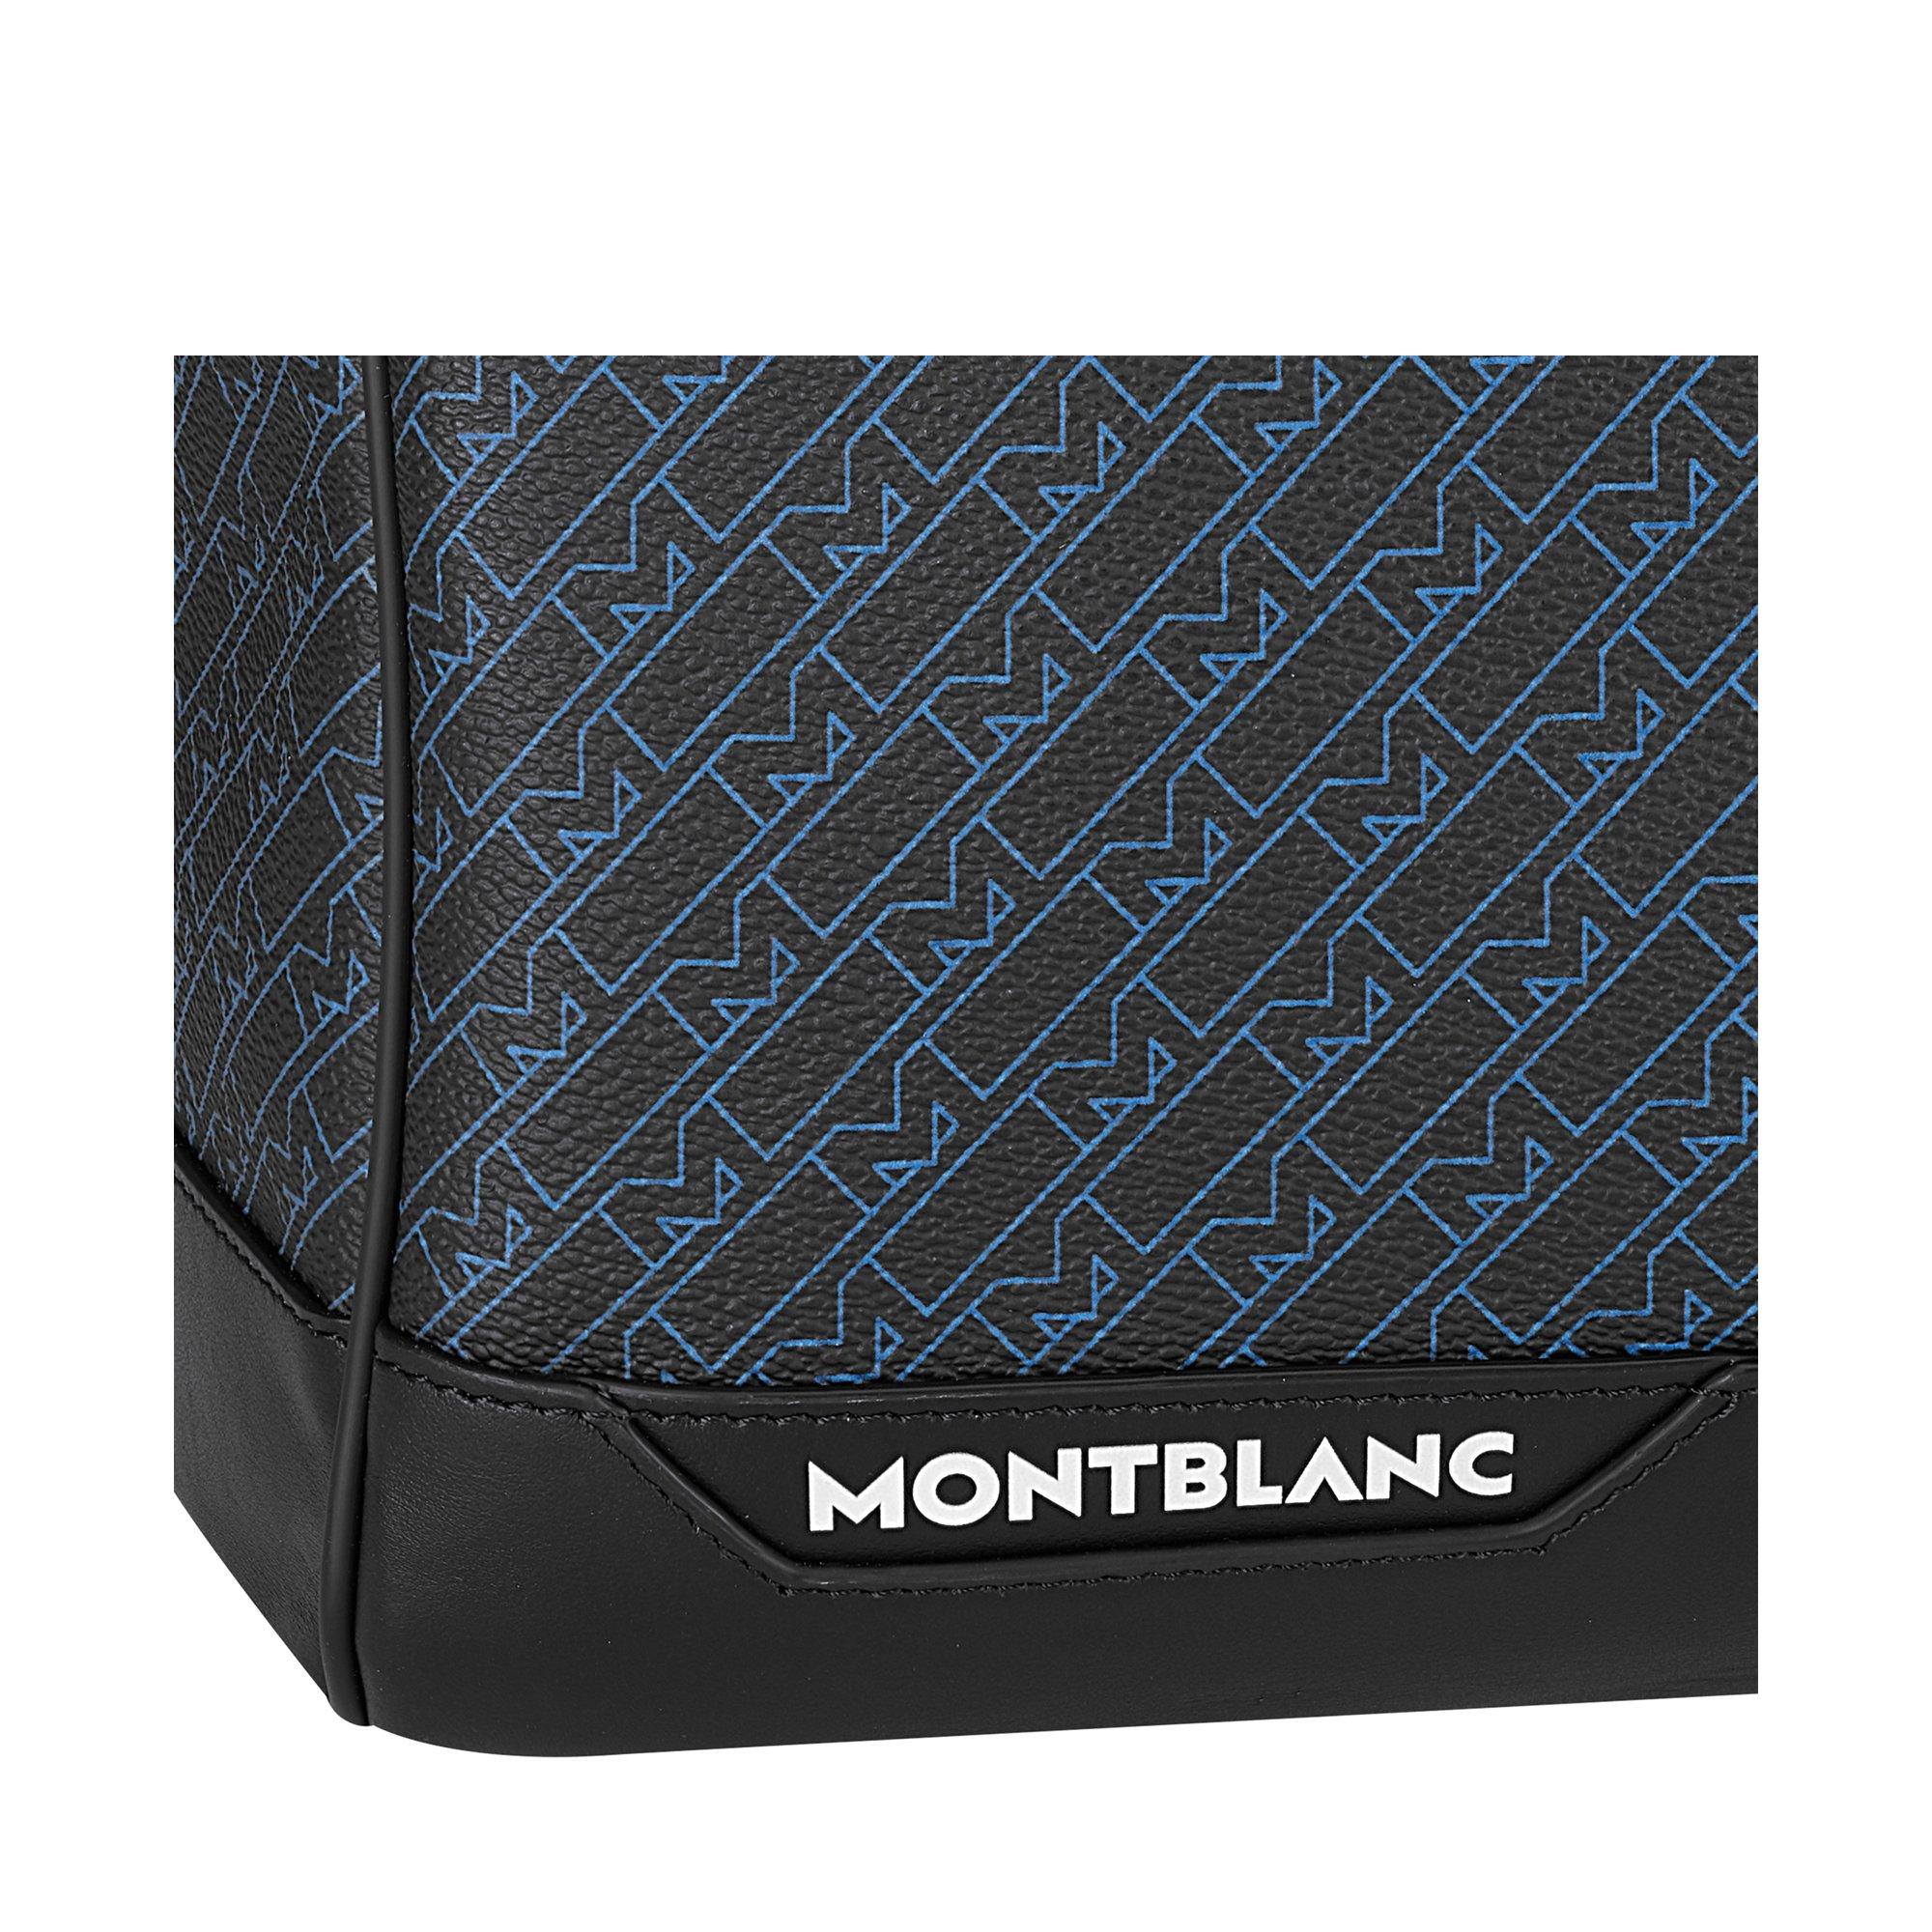 MONTBLANC M Gram Grand sac
 